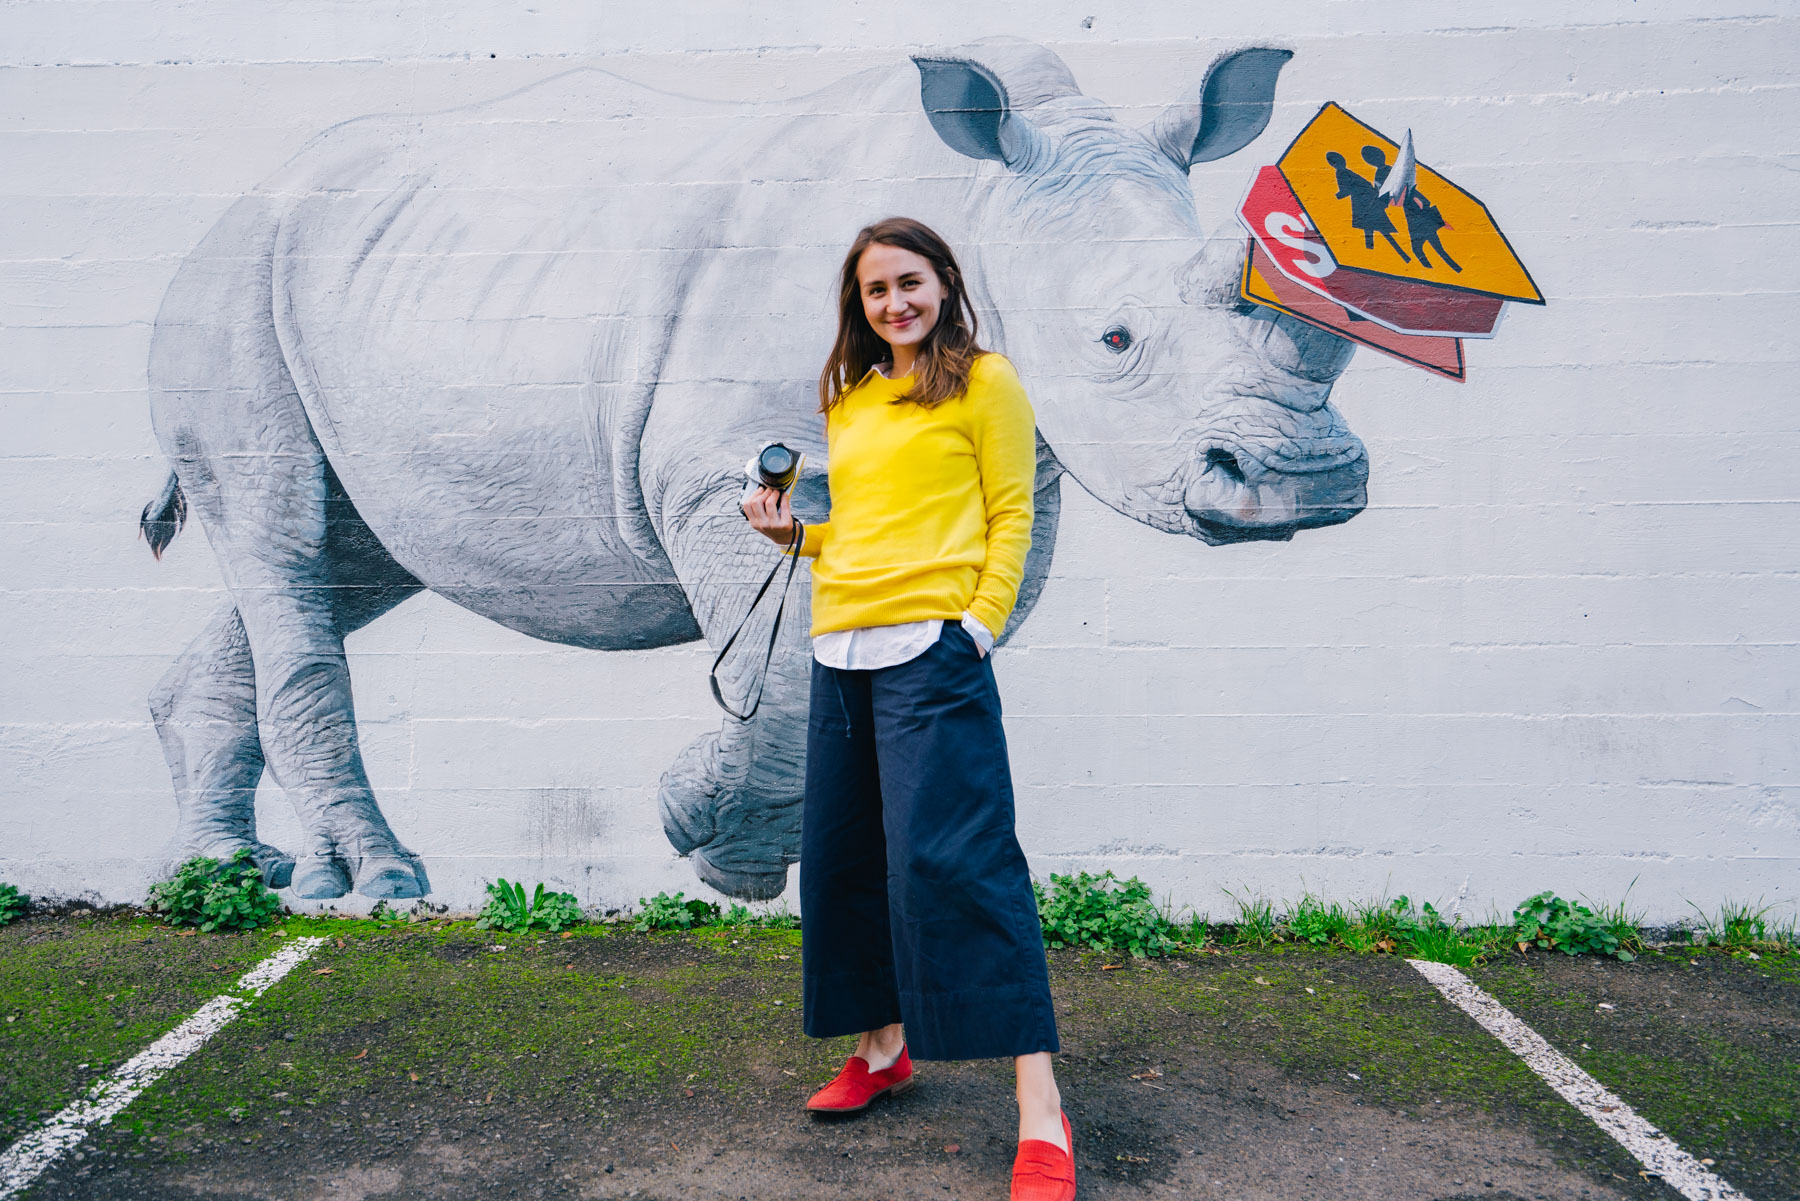 Rhino mural Portland